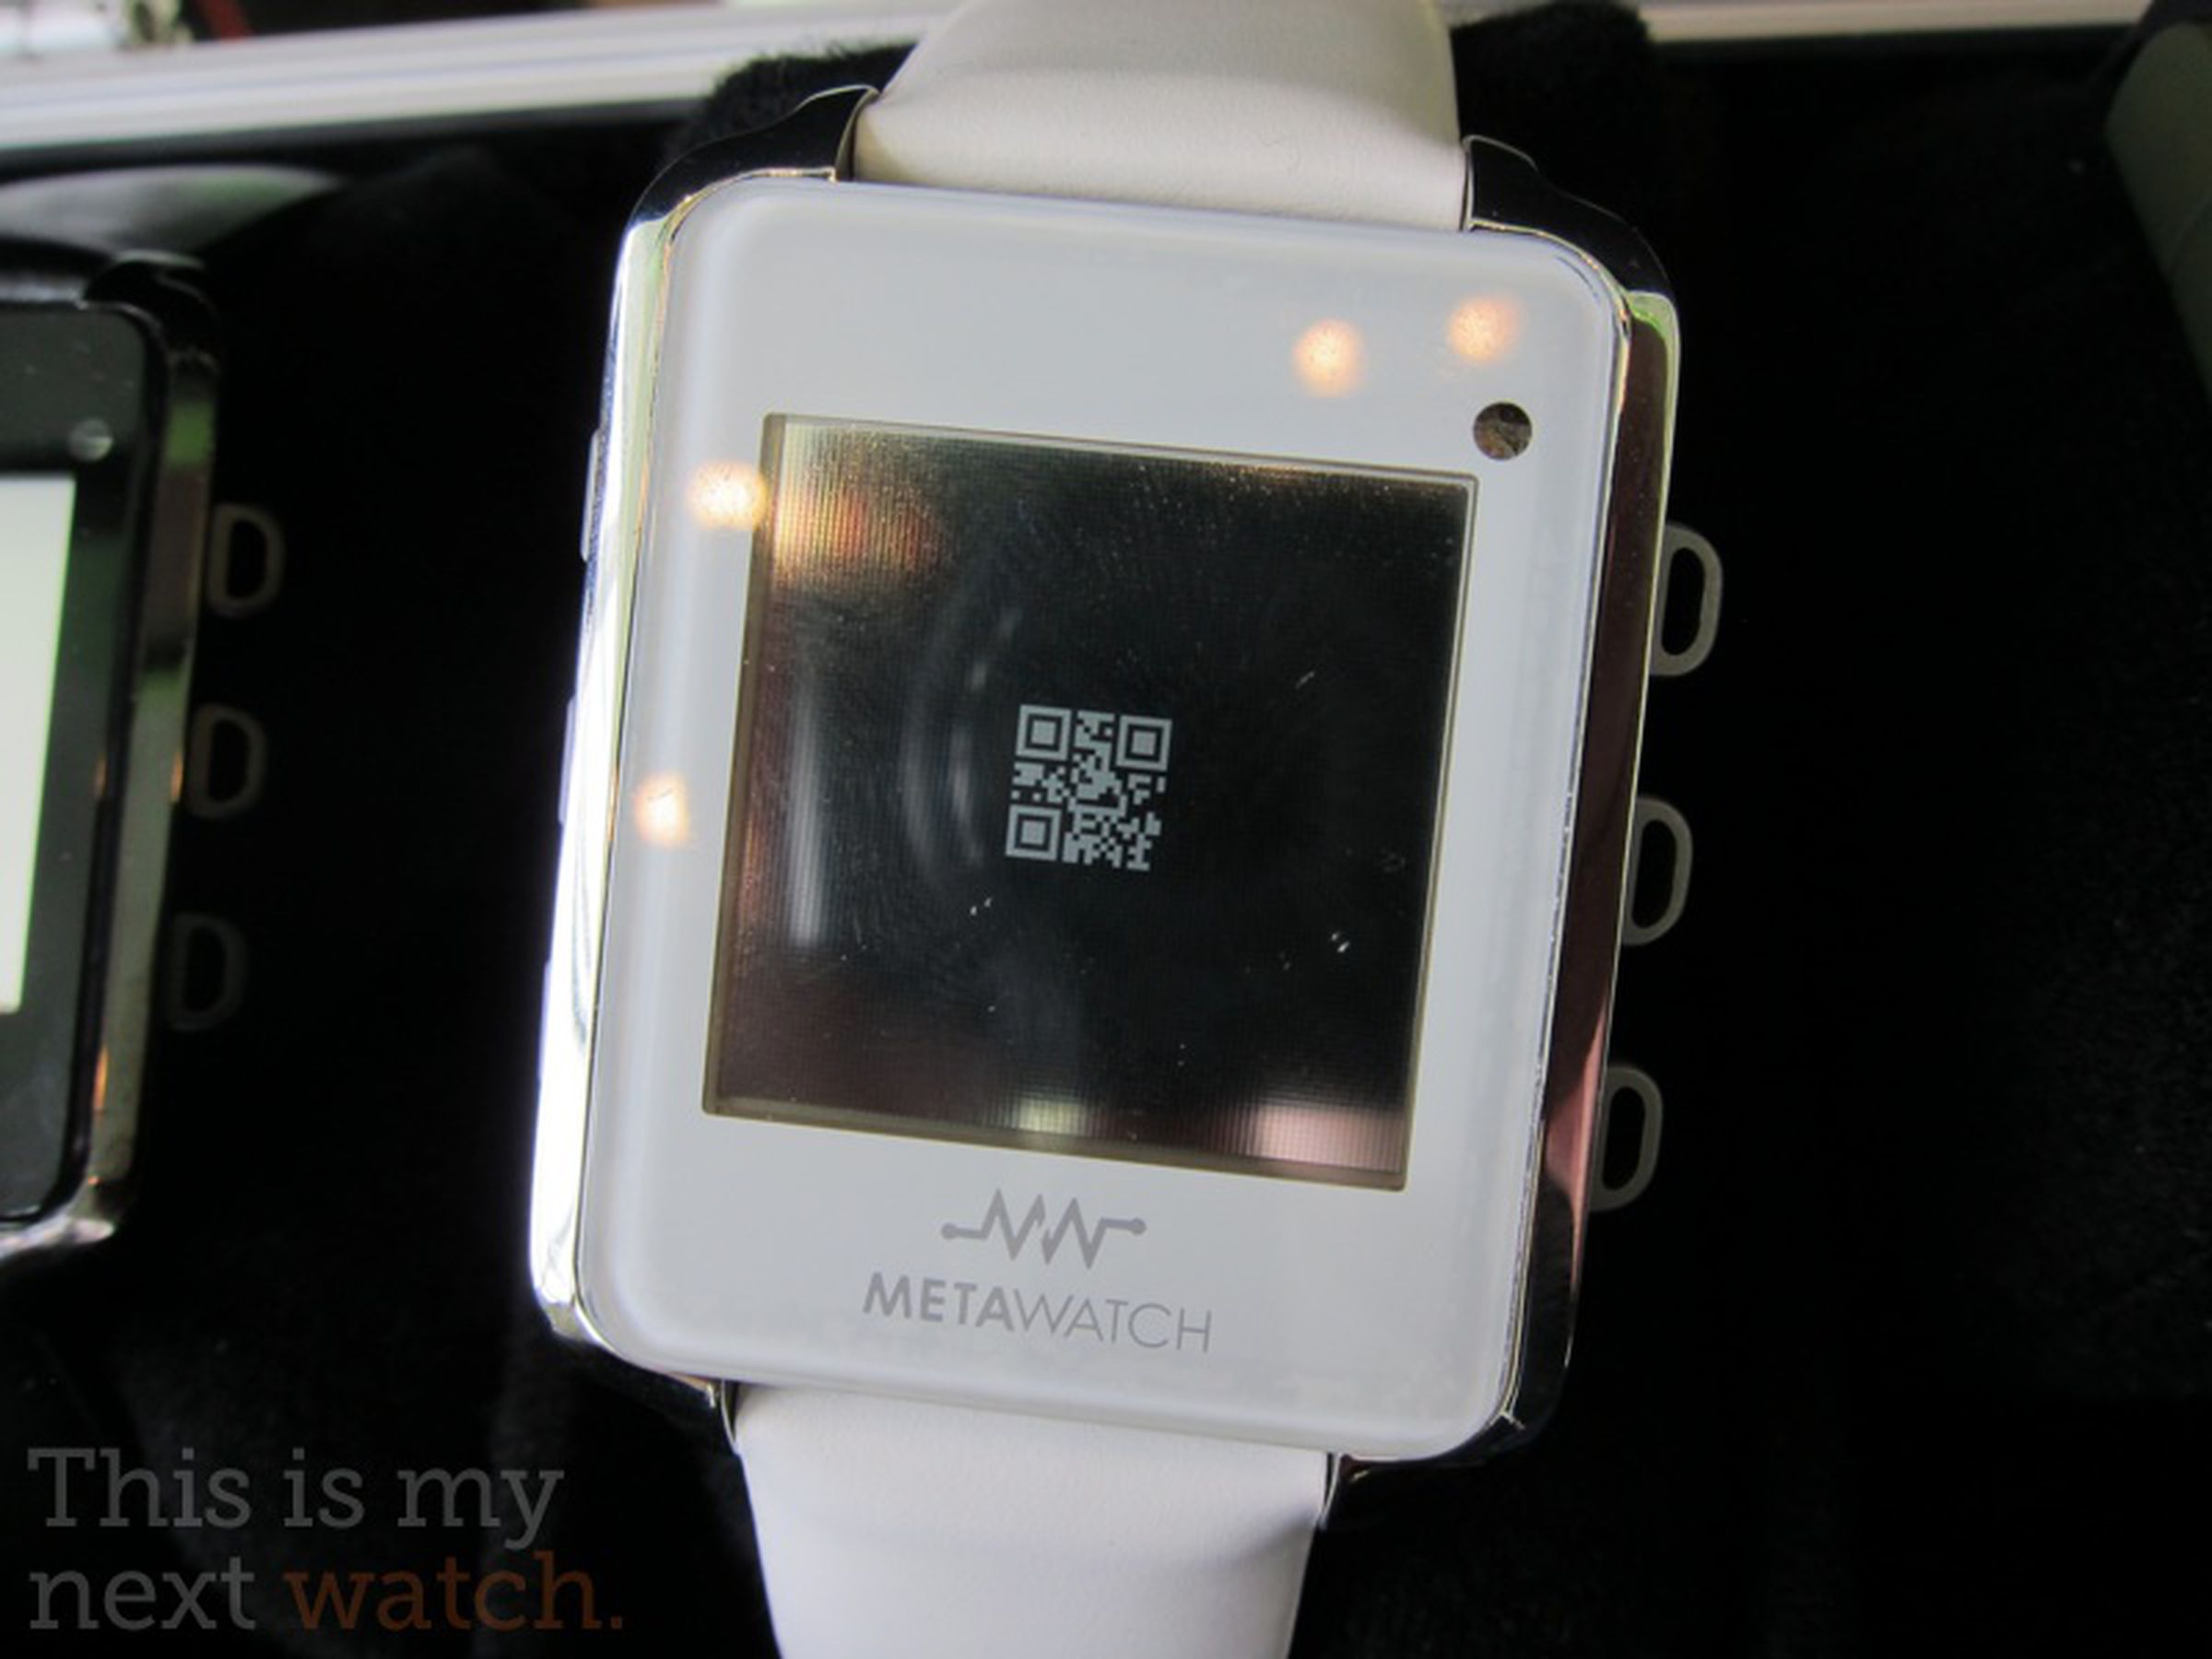 Meta Watch hands-on pictures